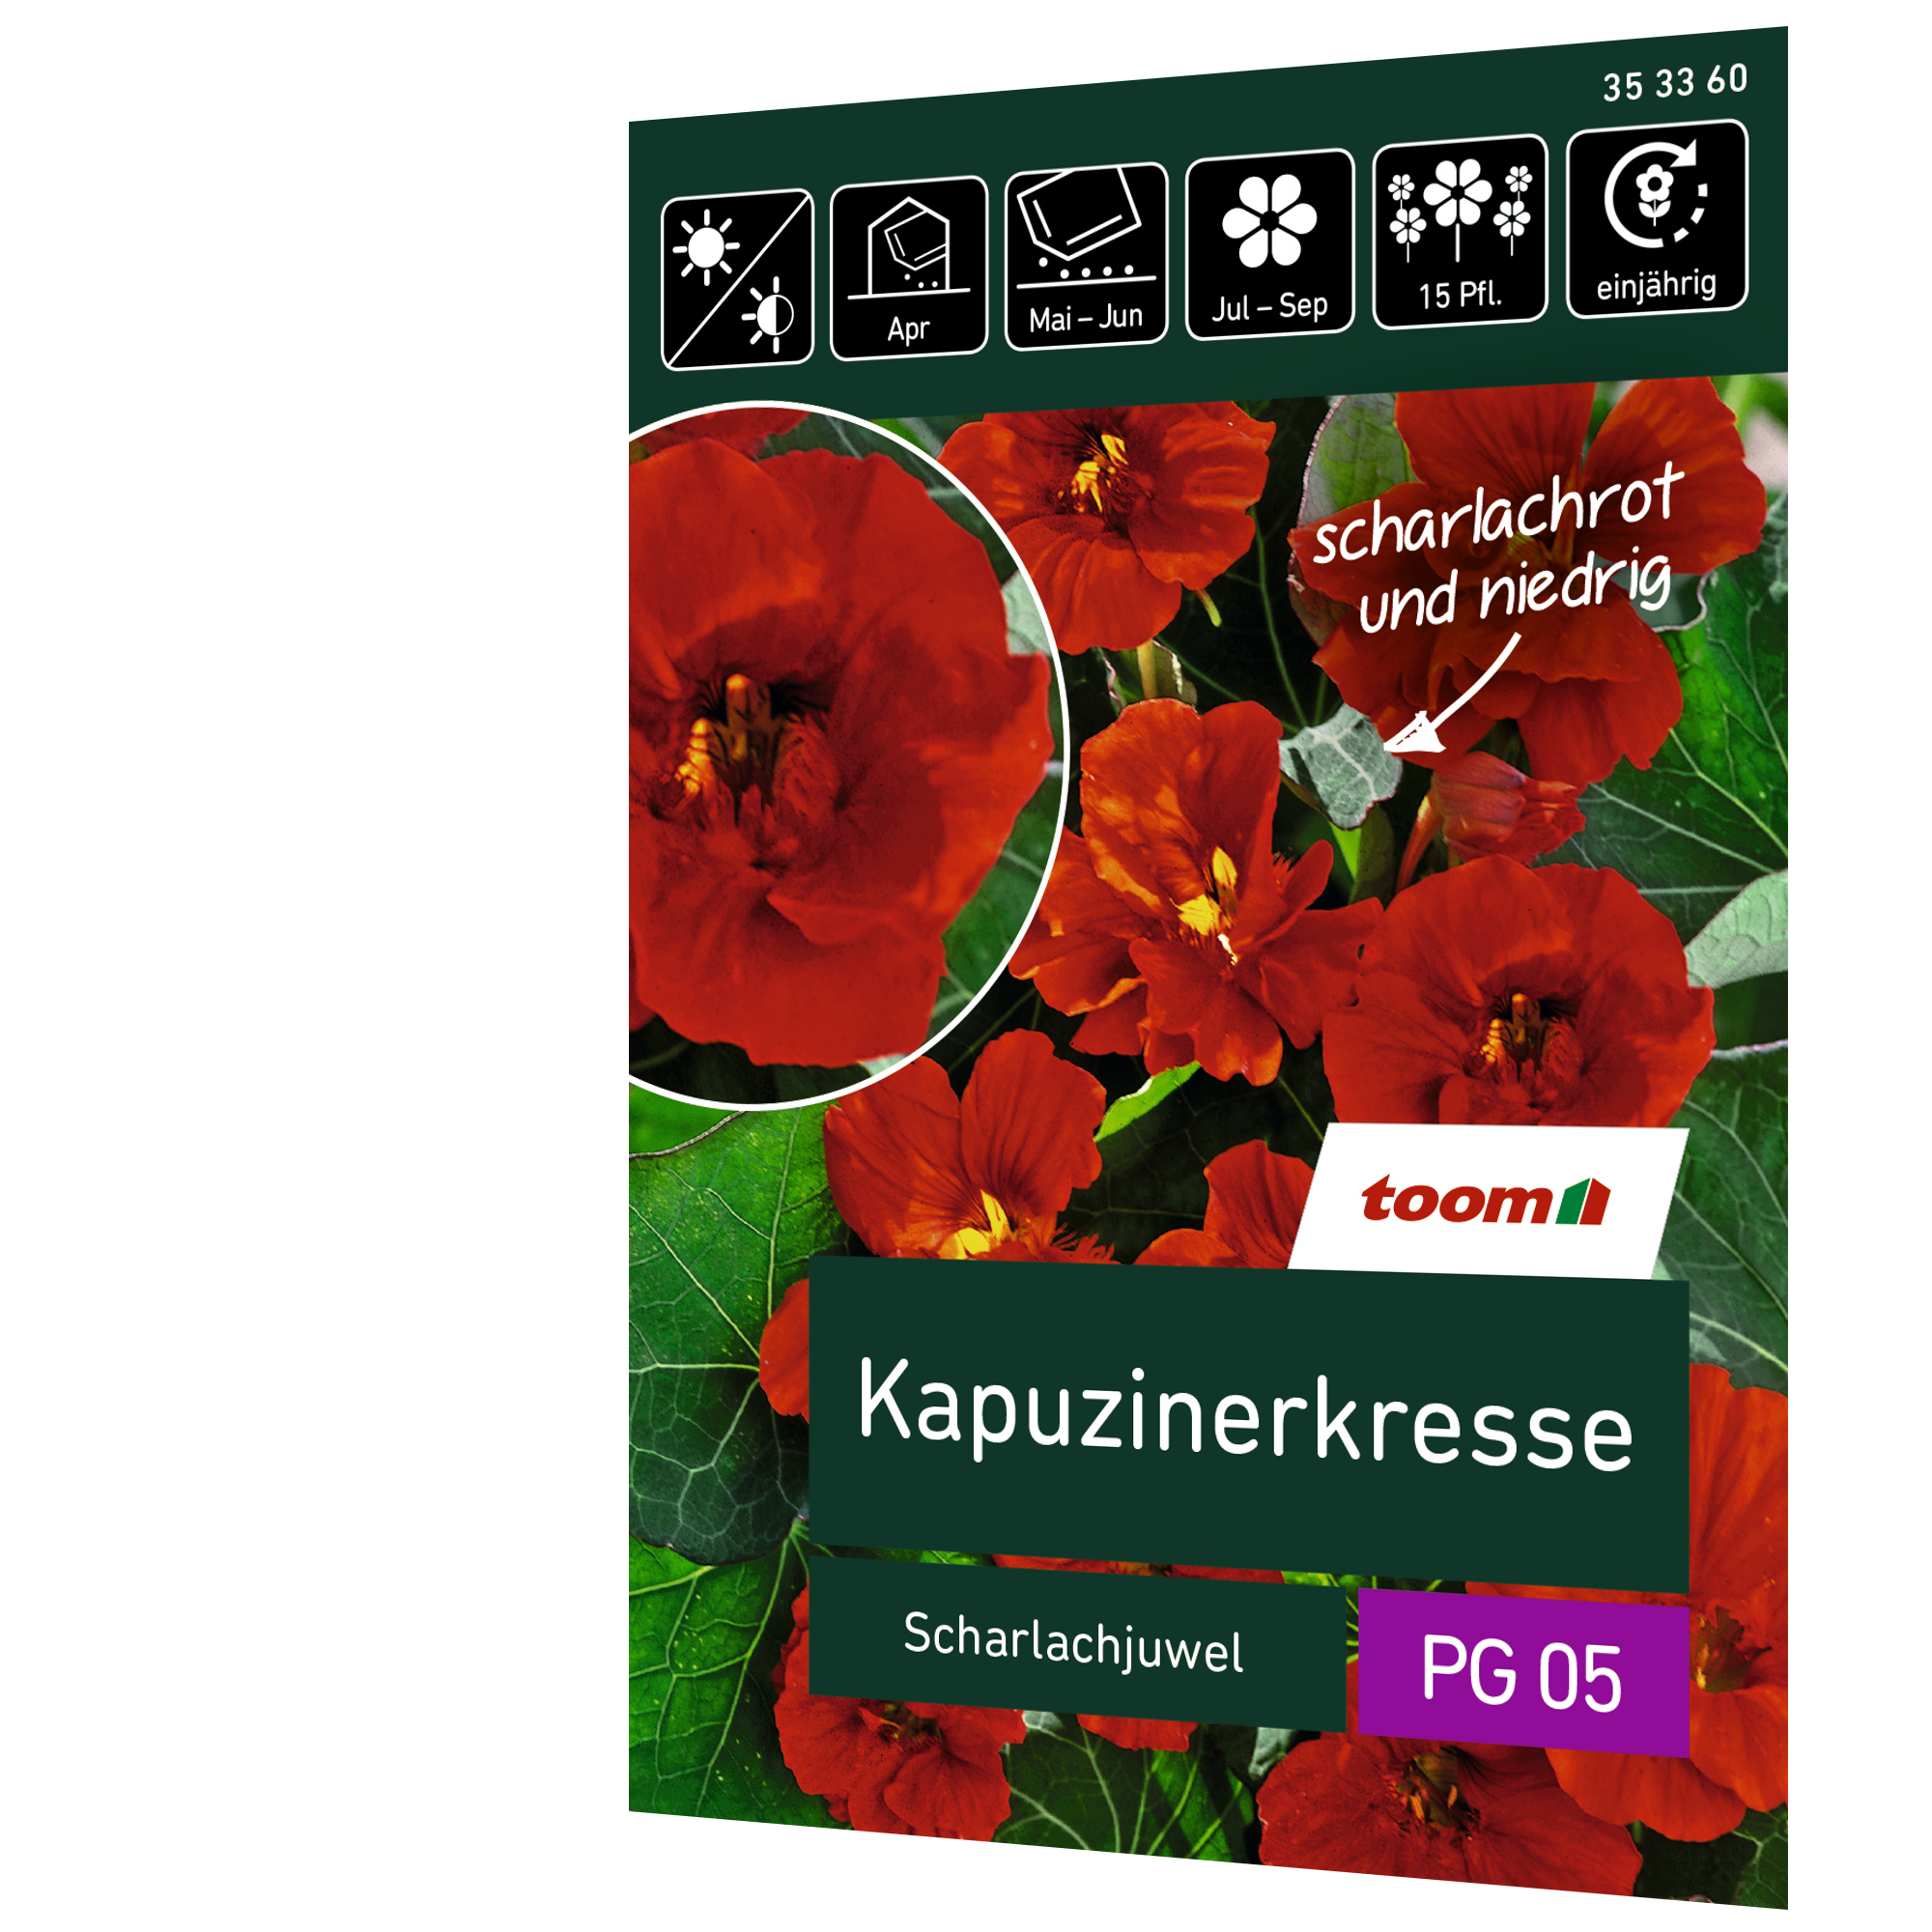 Kapuzinerkresse 'Scharlachjuwel' + product picture